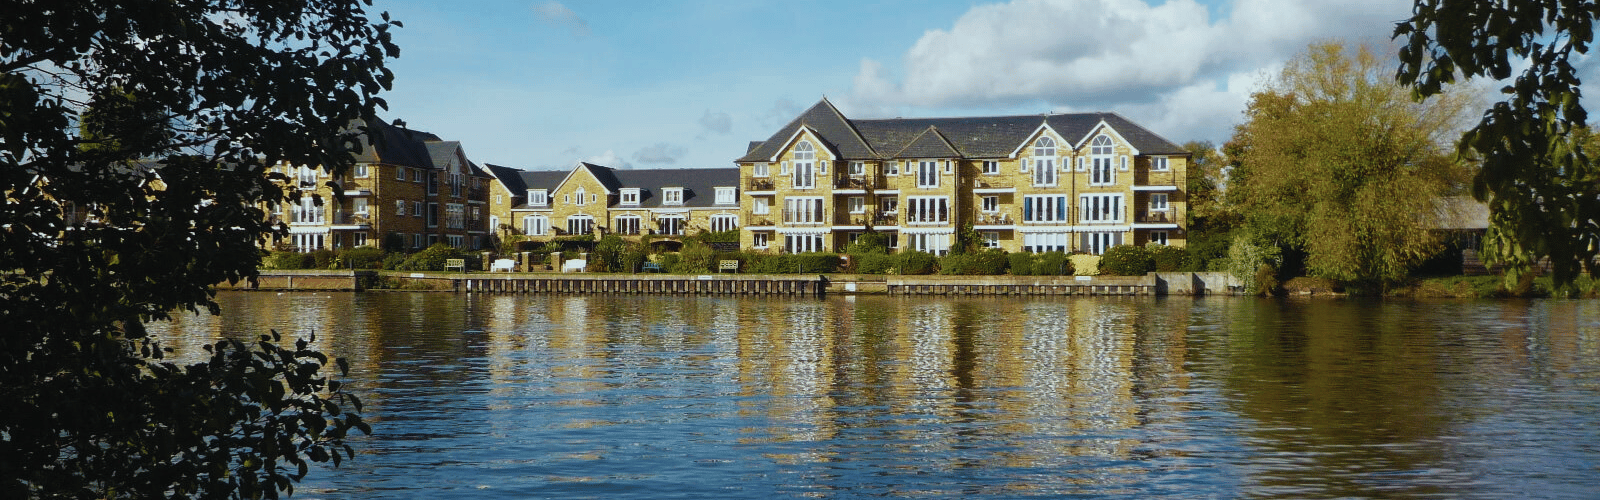 Walton-on-Thames Property Experts